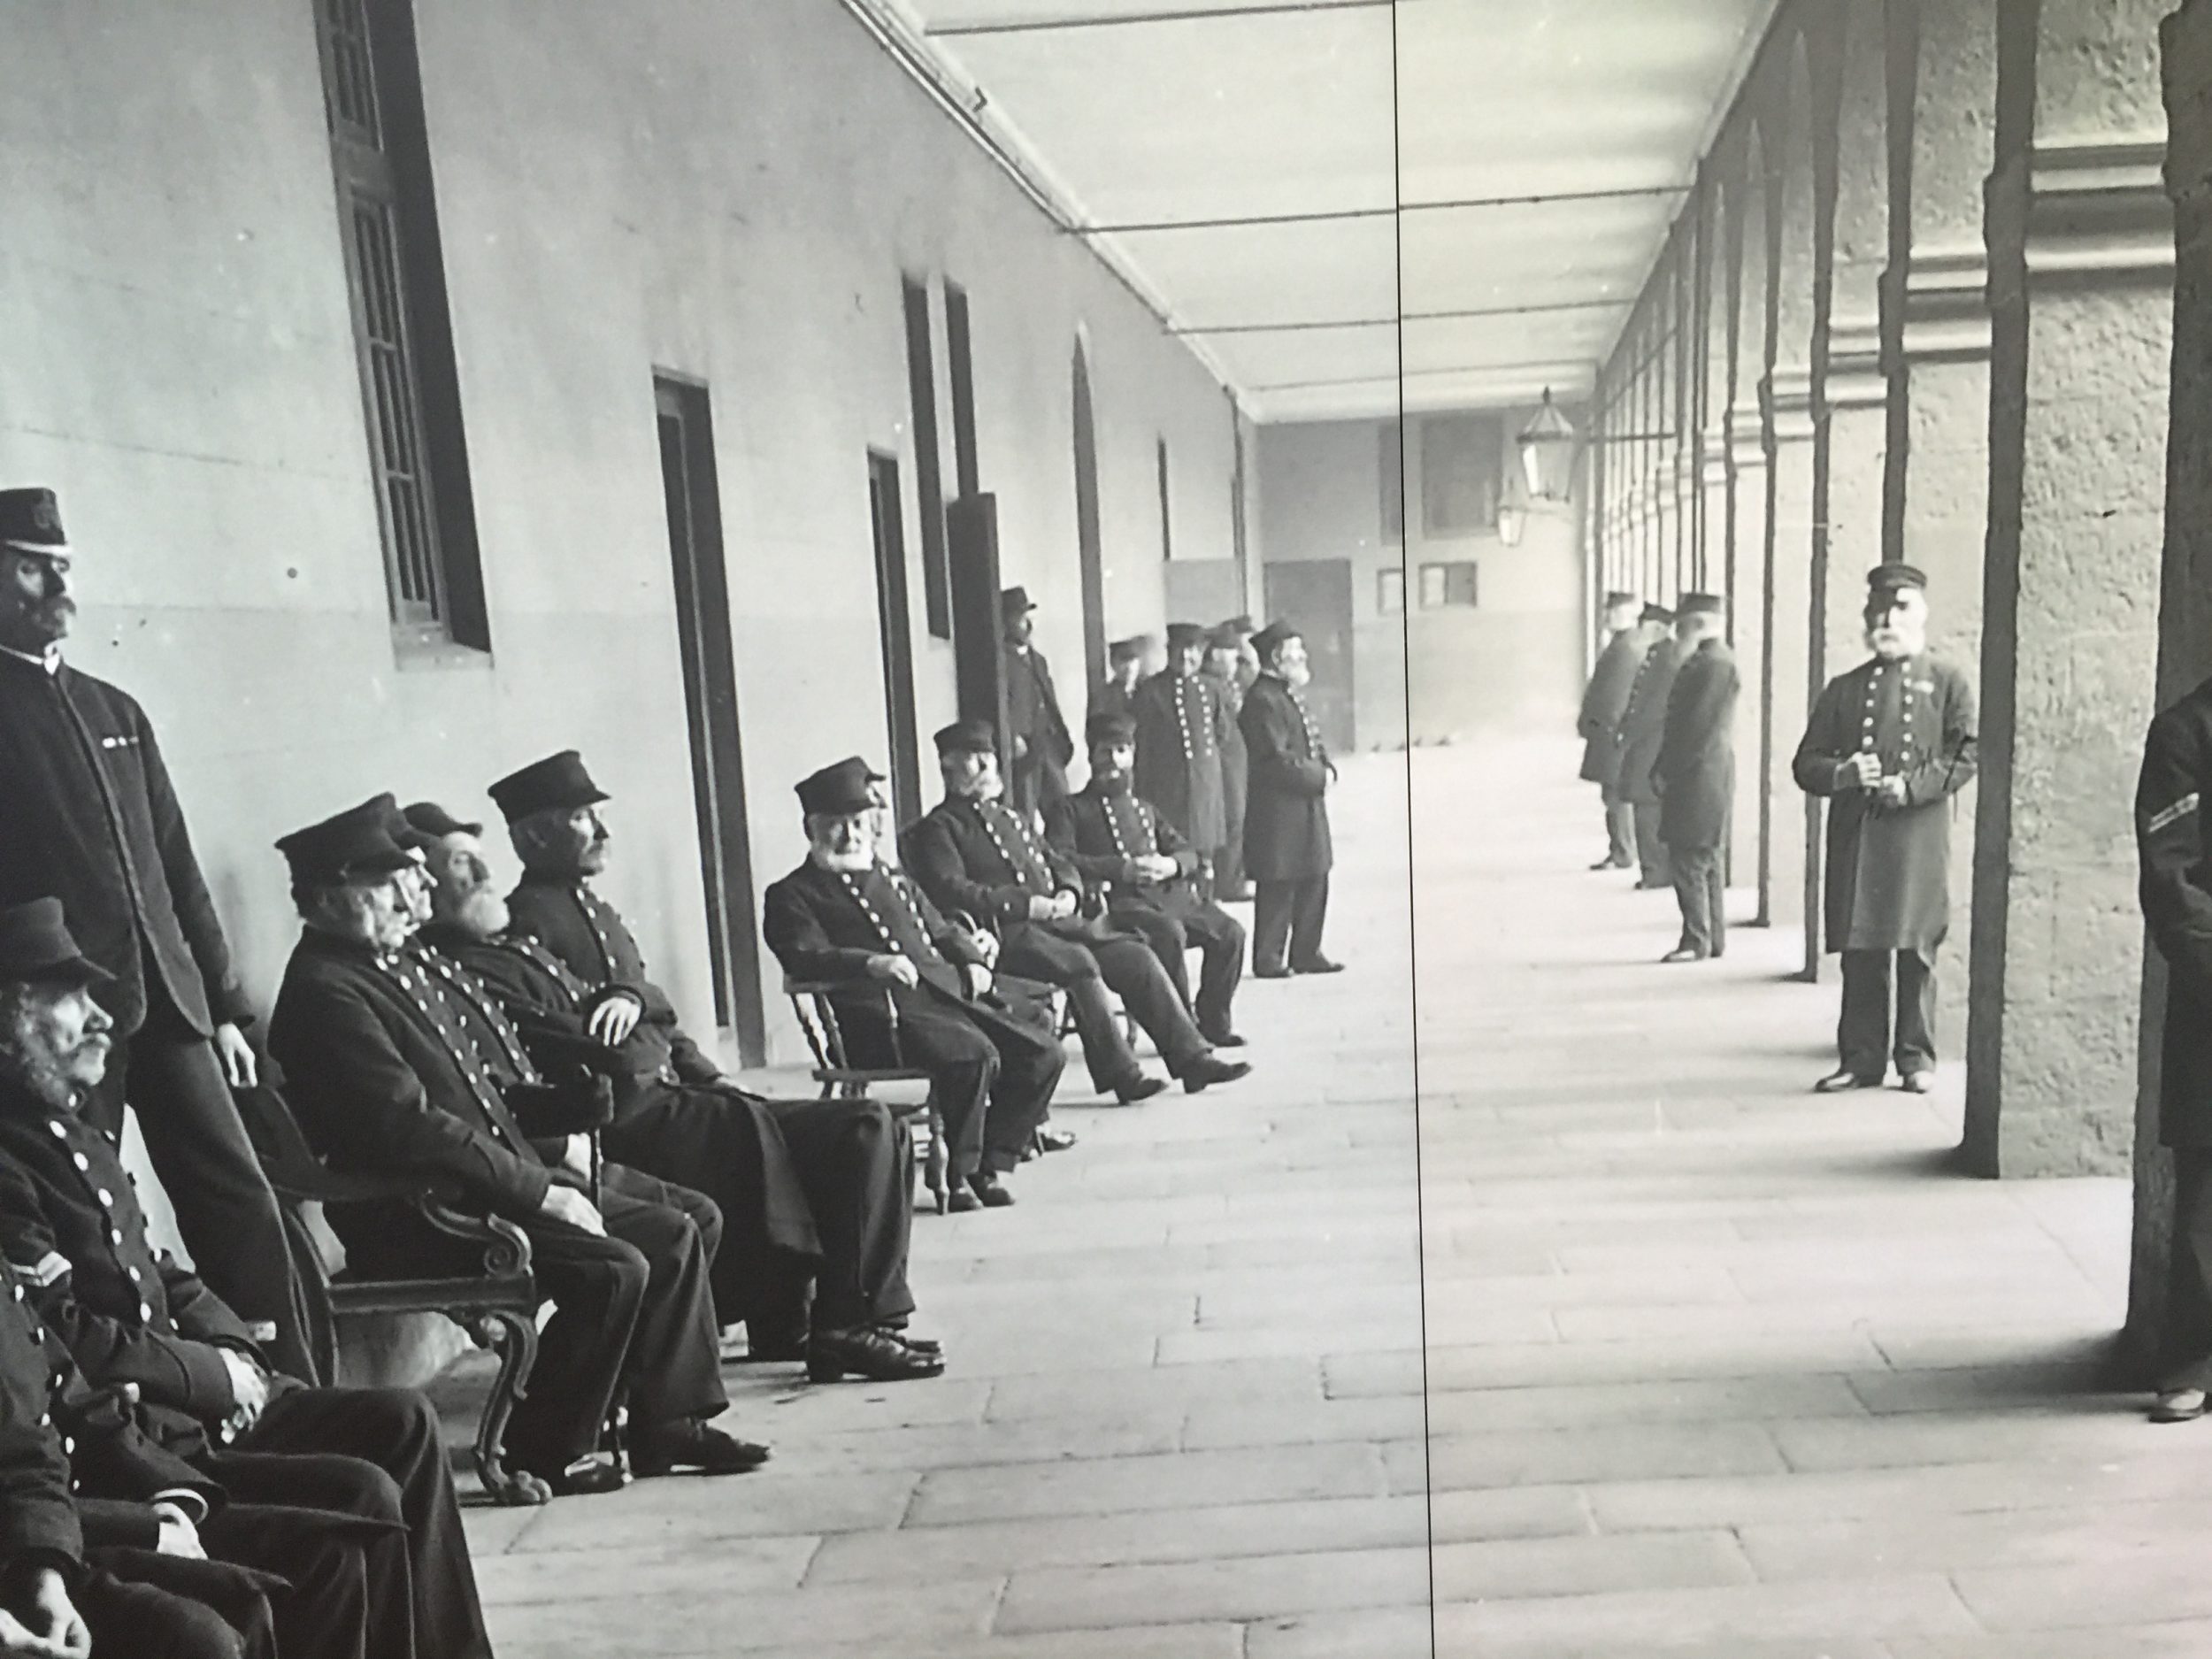 Historic photo from the Royal Hospital Kilmainham.